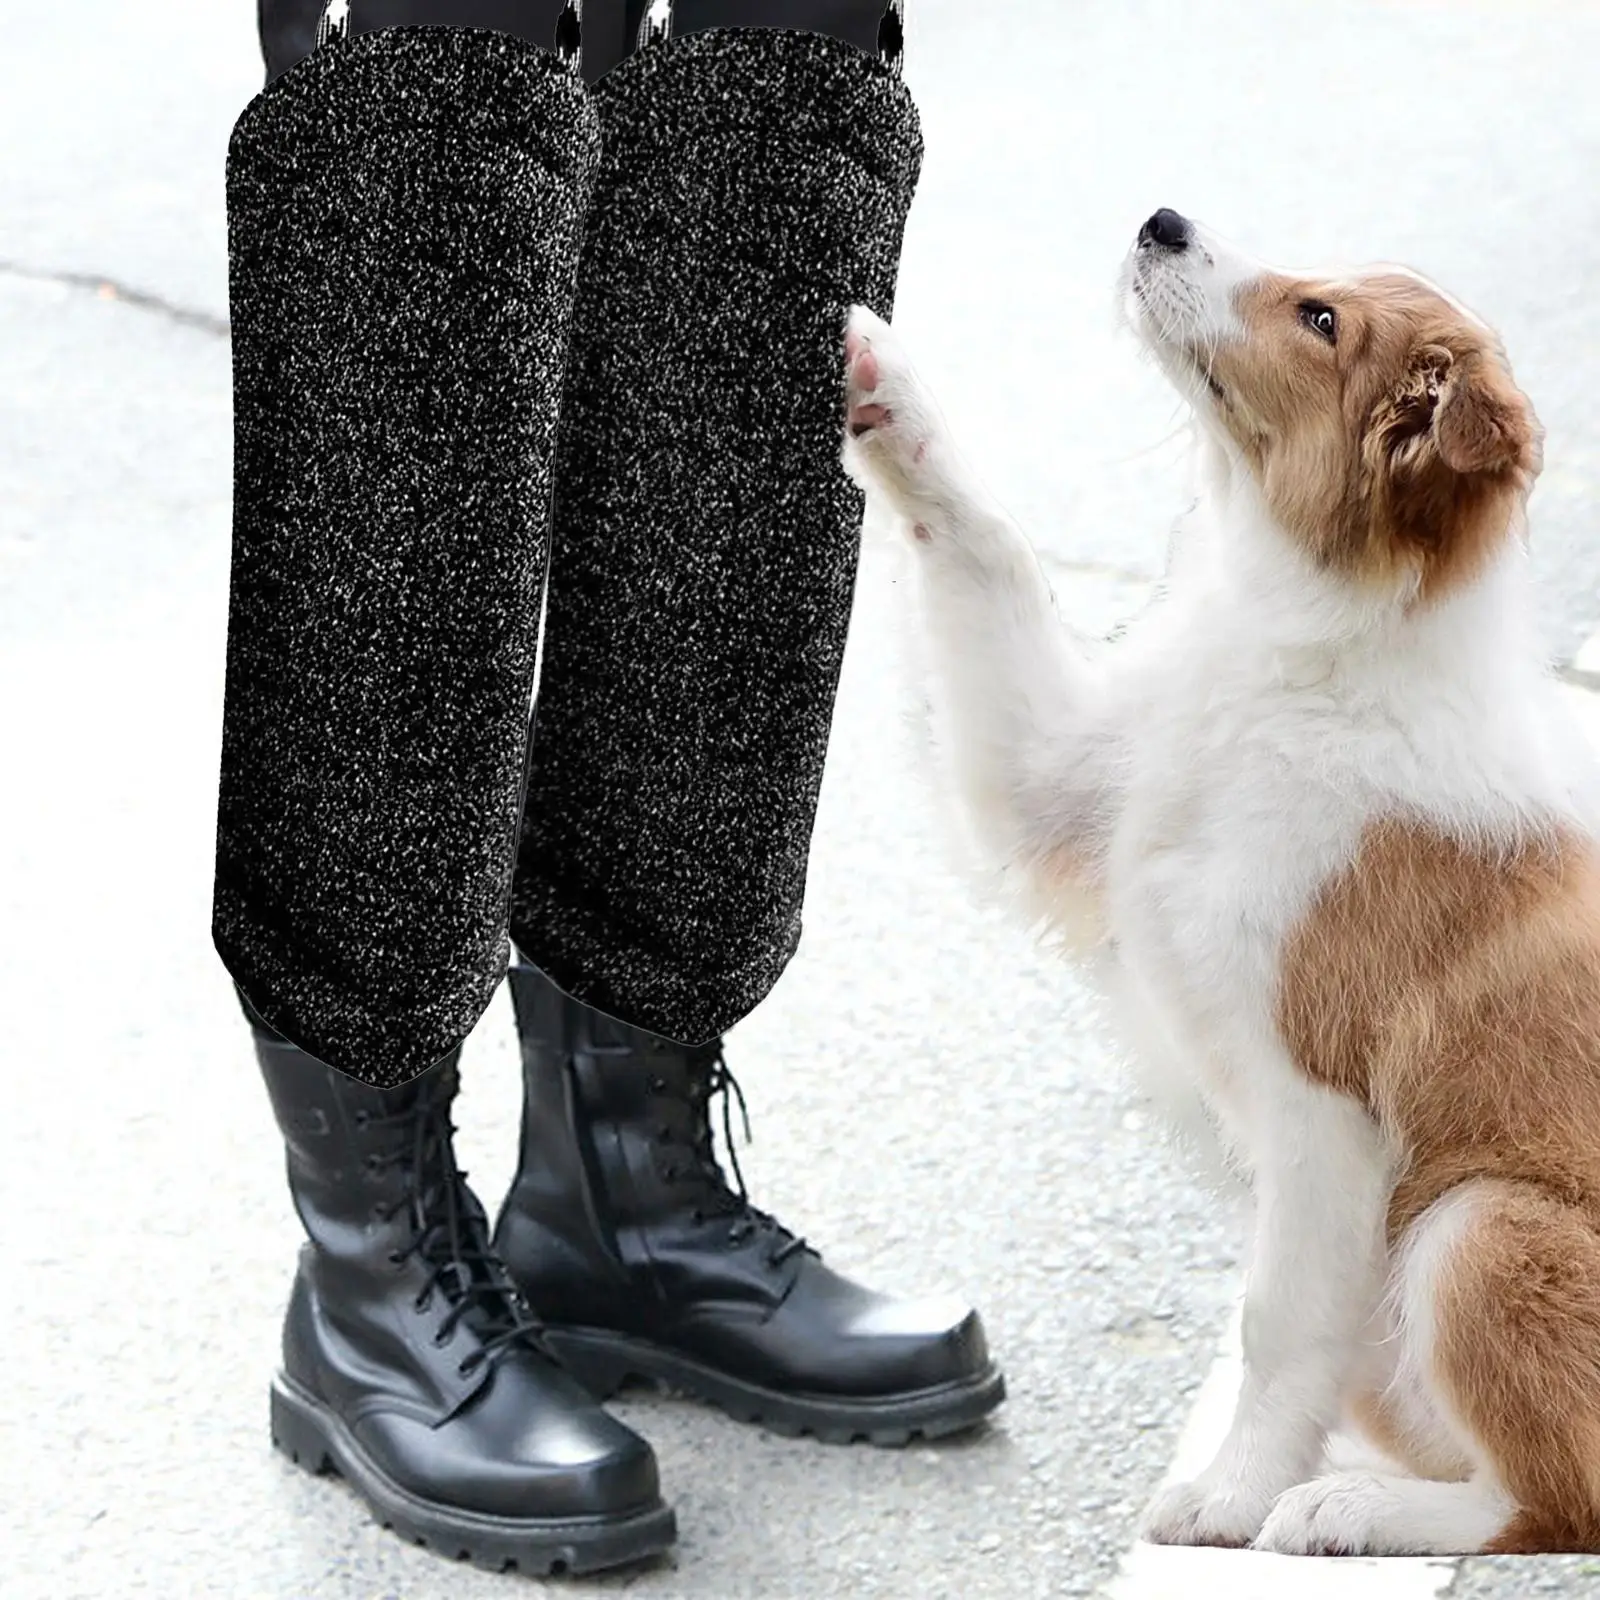 Dog Training Legs Sleeves Practical Multifunction Protection Tear Resistant for German Dog Large Medium Dogs Pet Husky Training